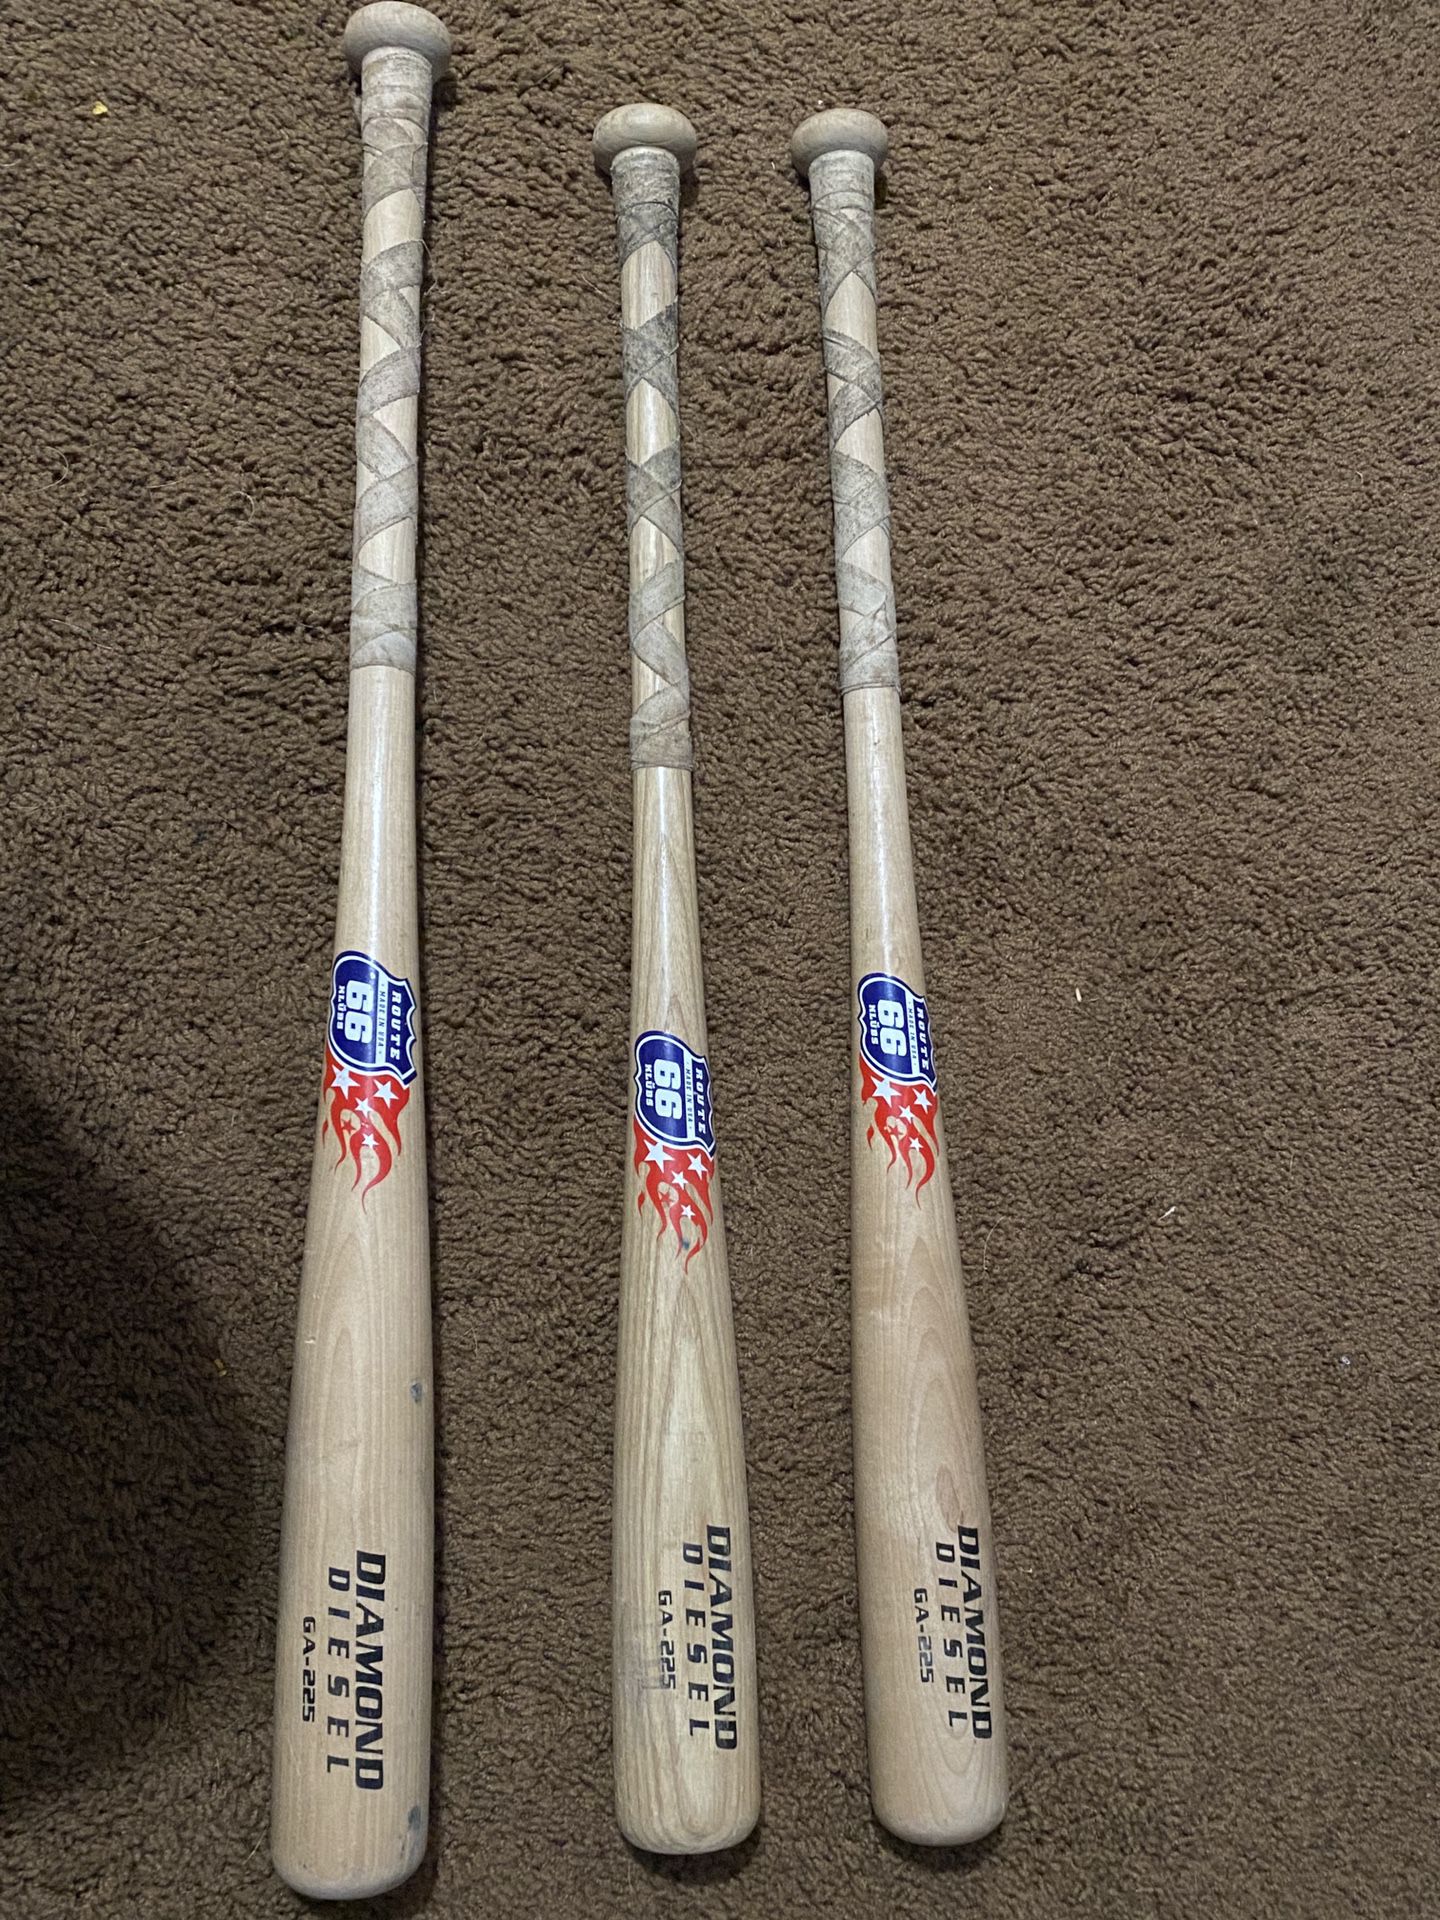 Youth Wooden baseball bats 29’ 29’ 28’